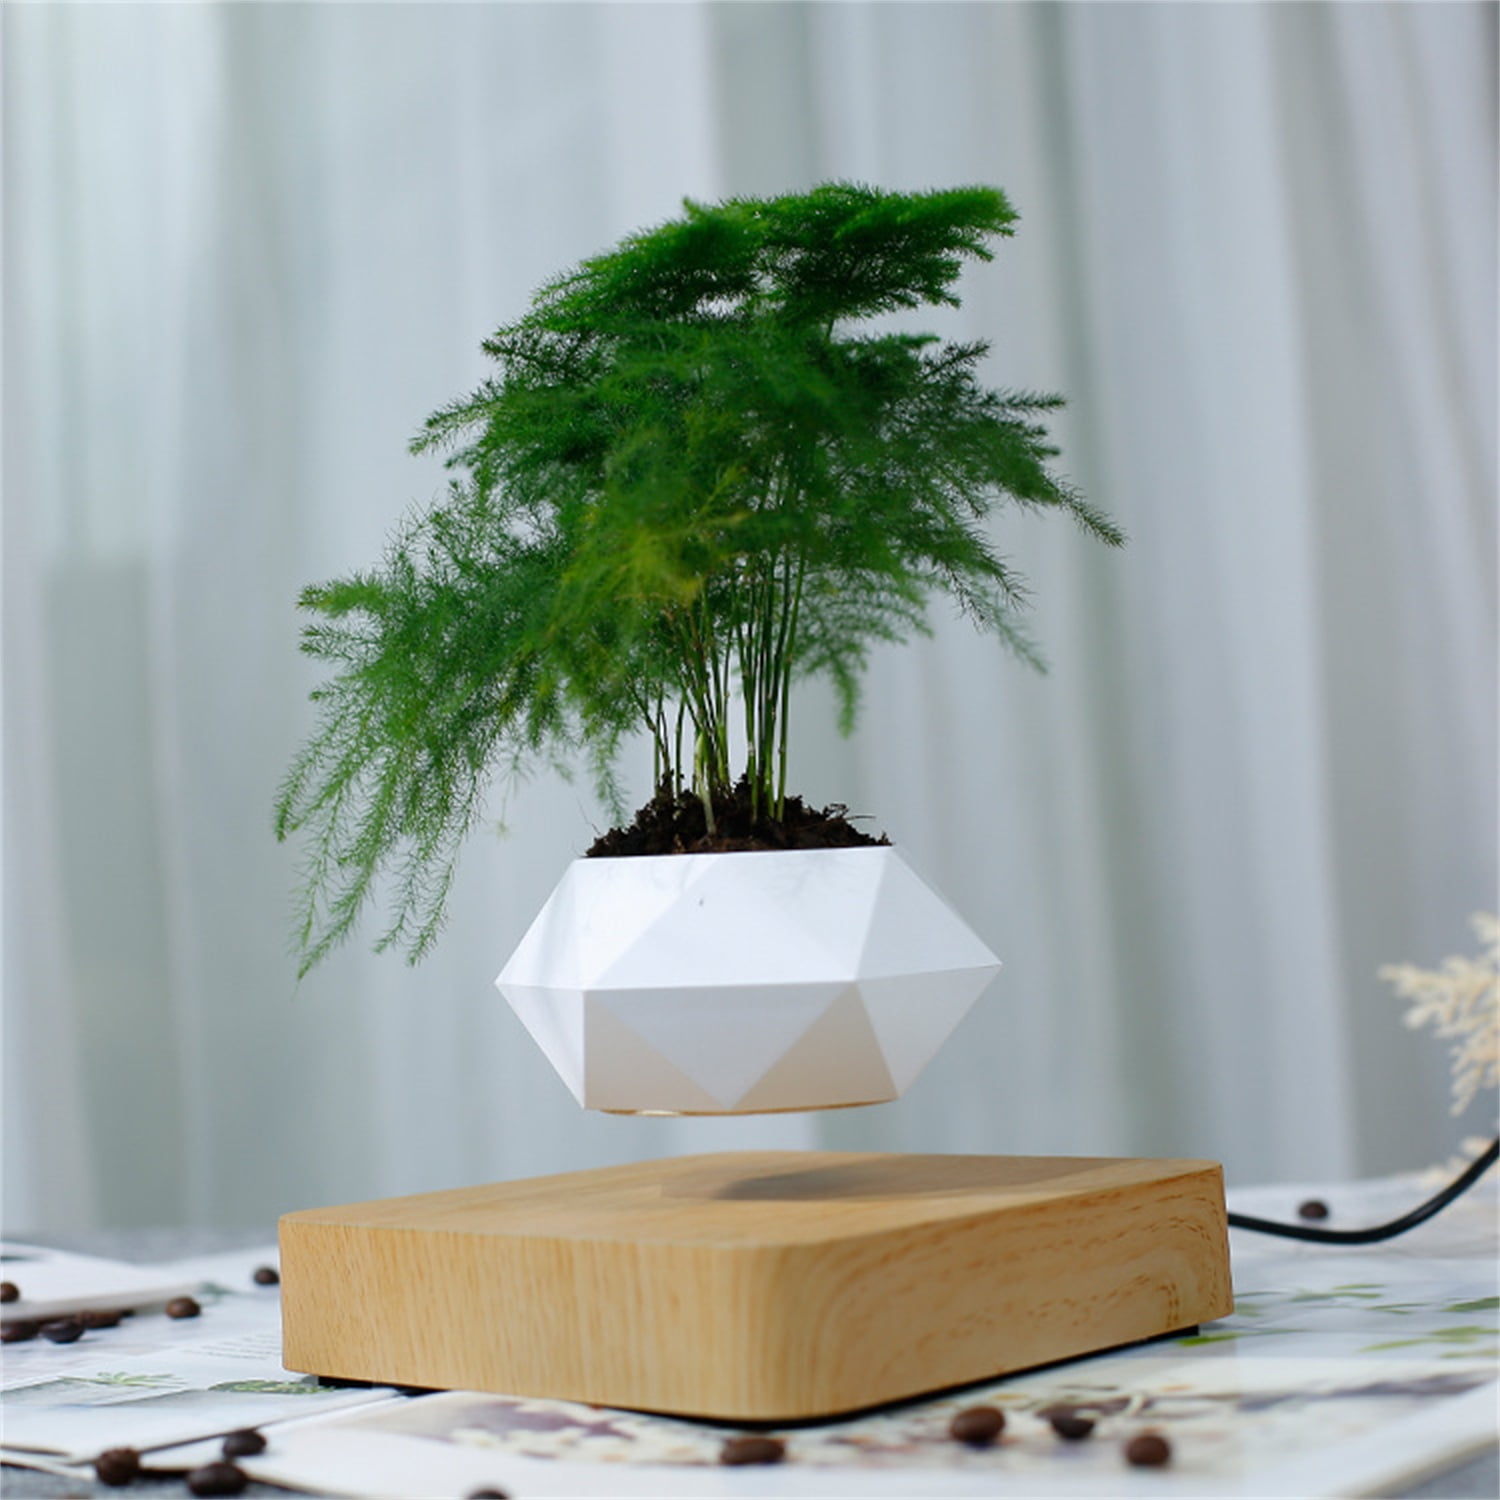 Levitating Floating Spinning Flower Plant Pot High-tech Smart Home Desk Decor